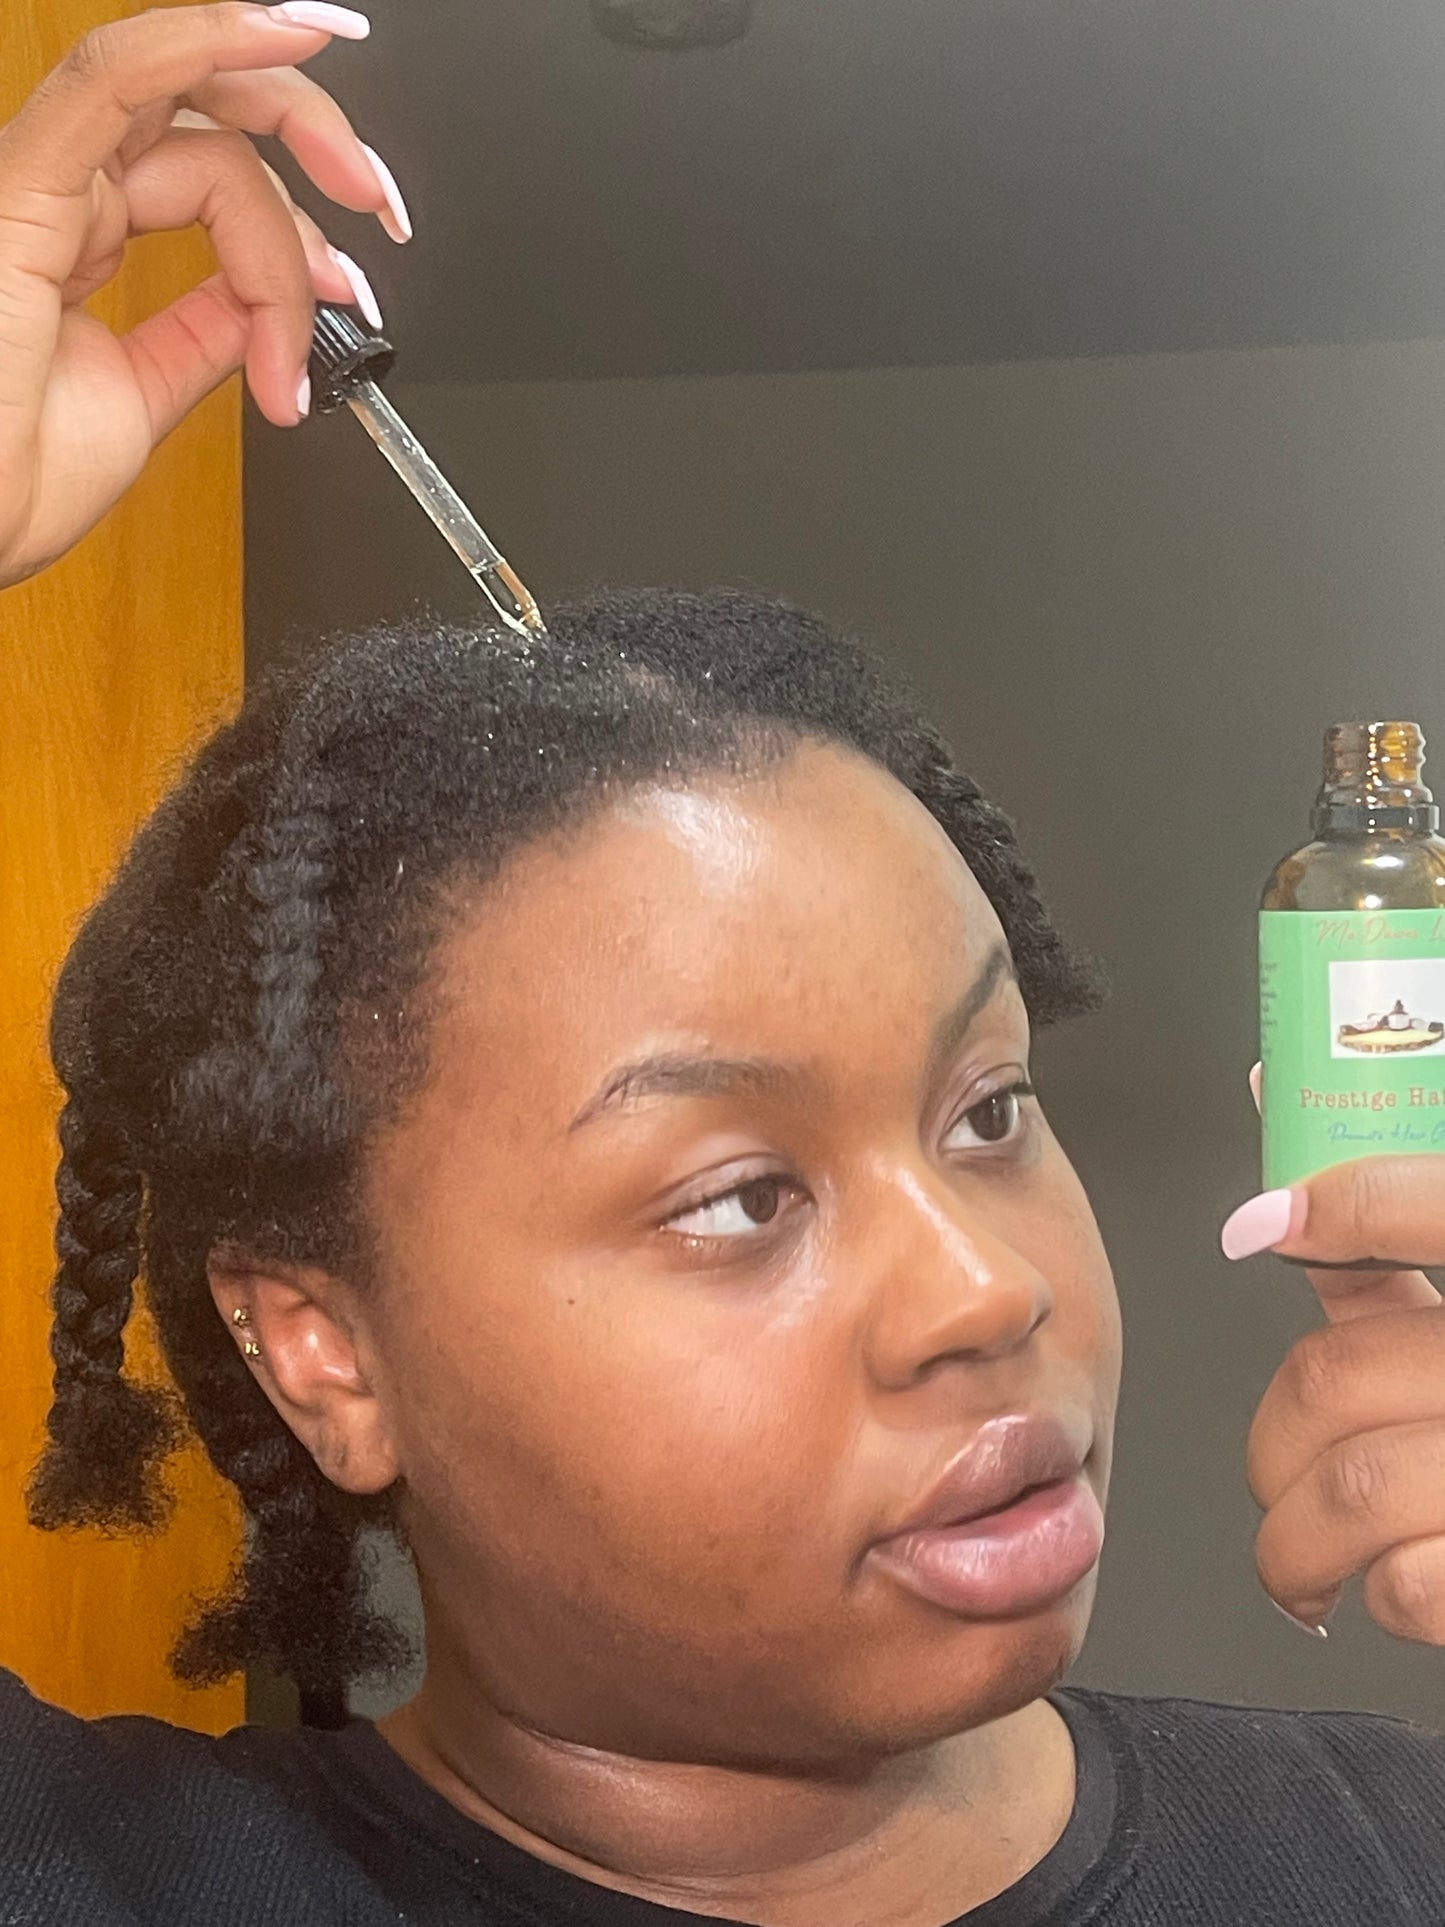 Prestige Hair Oil and Rice/Rose water hair spray Set: